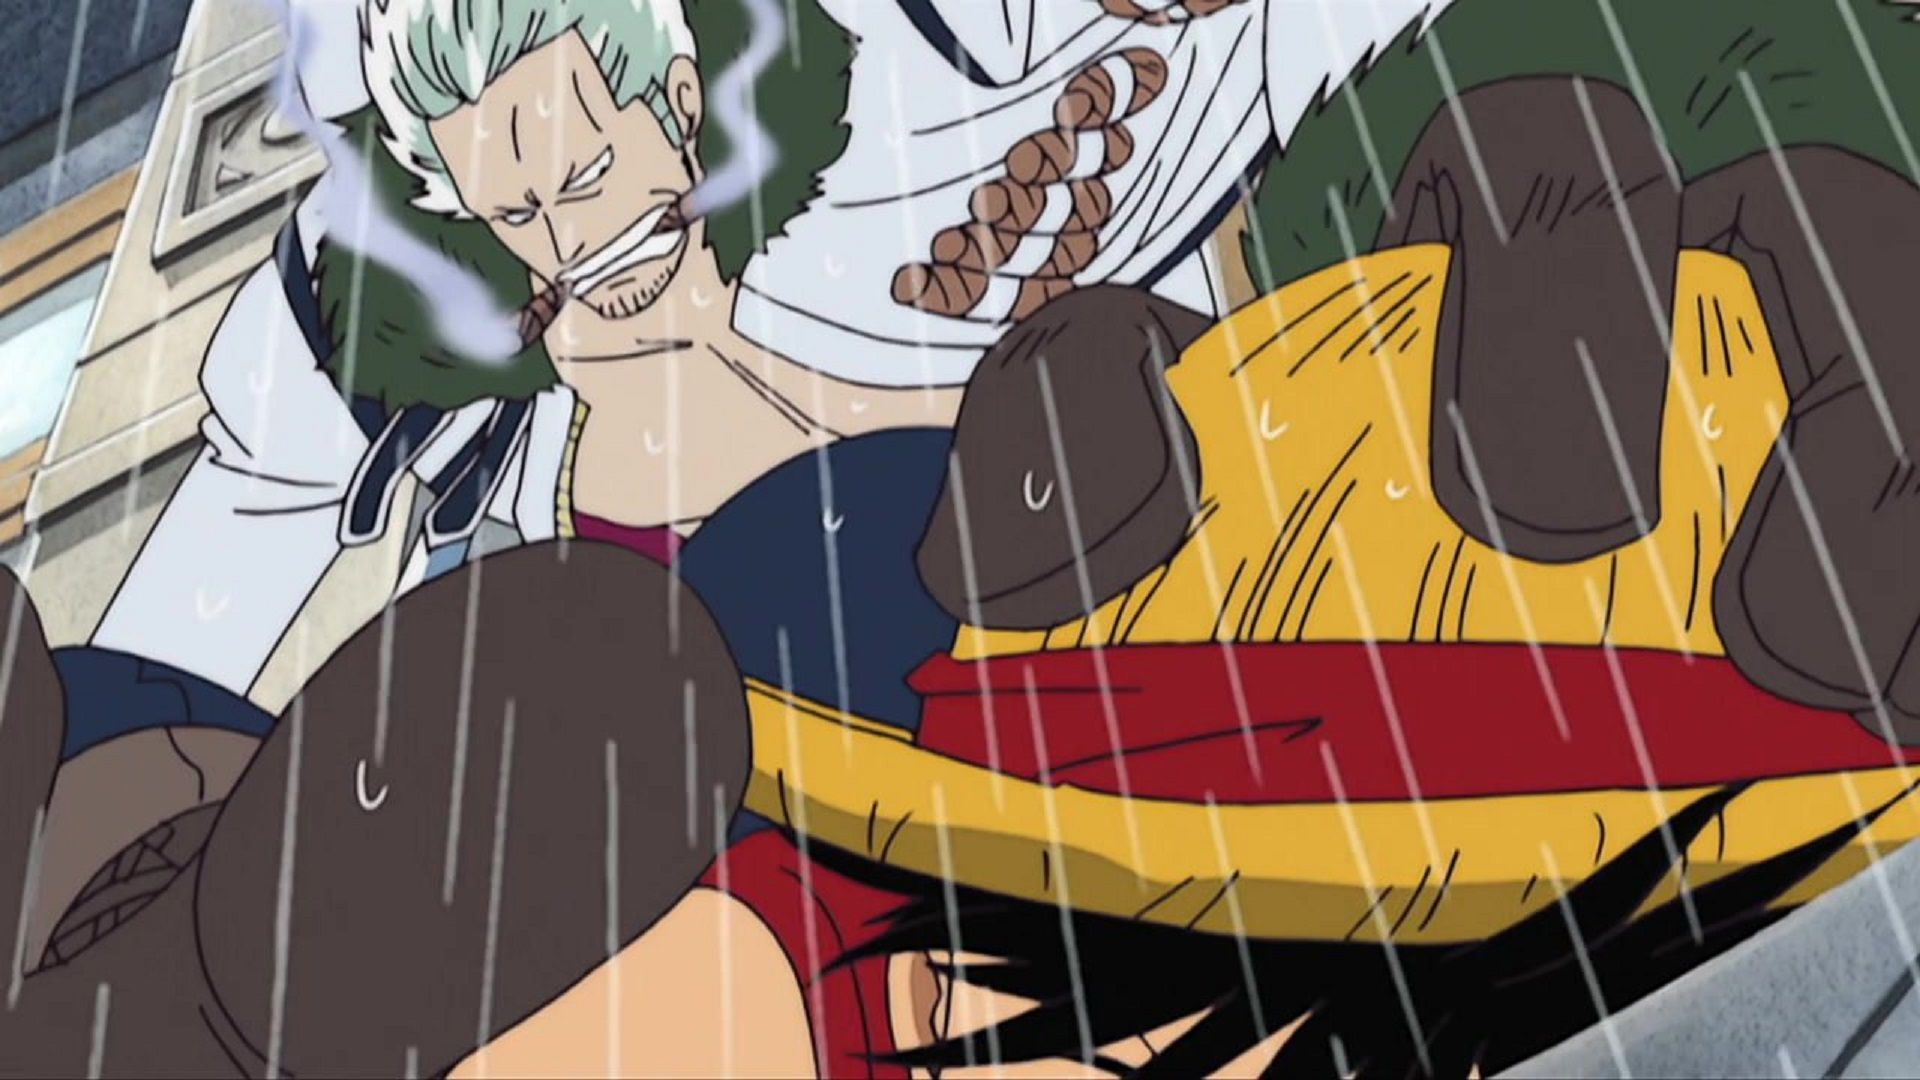 Smoker easily beat Luffy (Image via Toei Animation, One Piece)